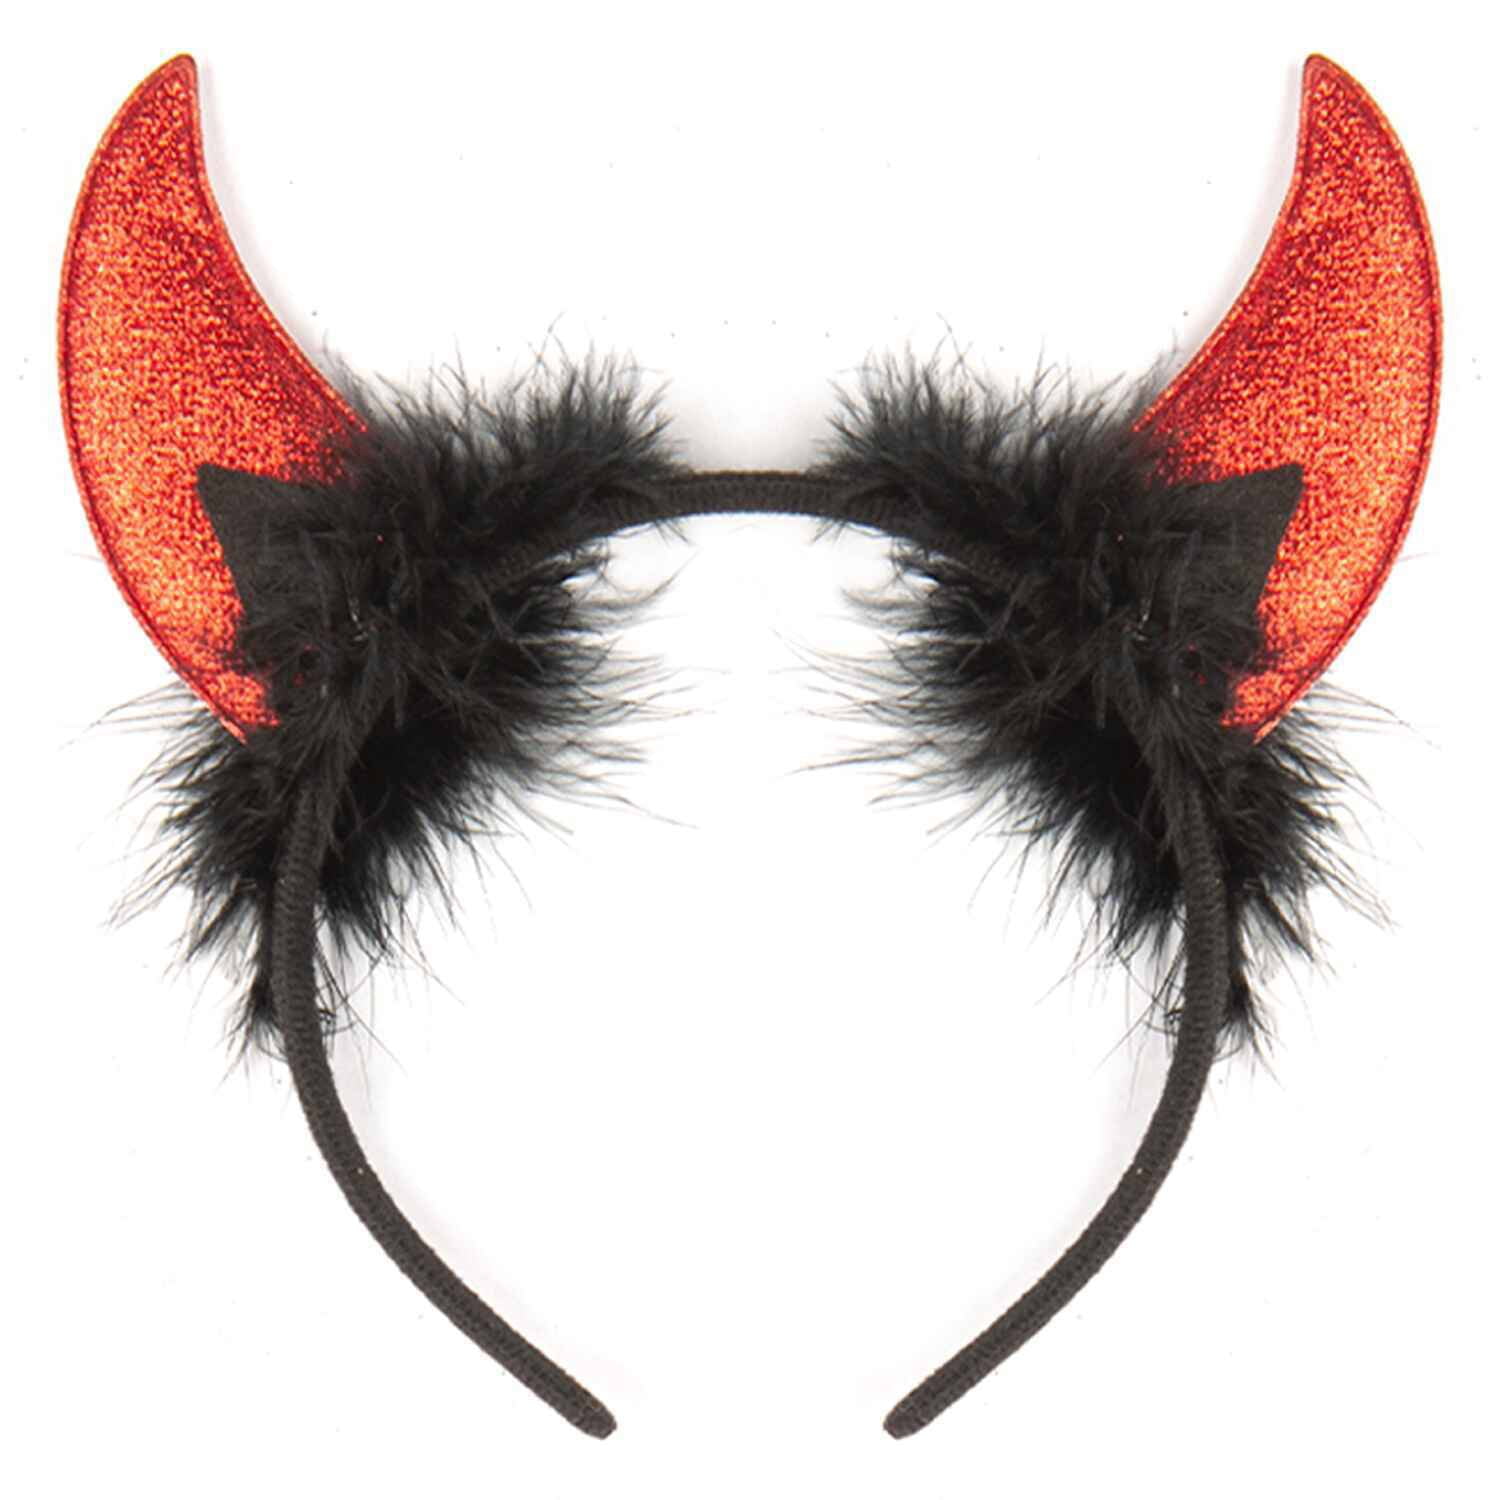 Red Devil set, red wings, devil accessories, devil horns, devil  fork,Halloween costume, Halloween outfit, fancy dress, festival outfit